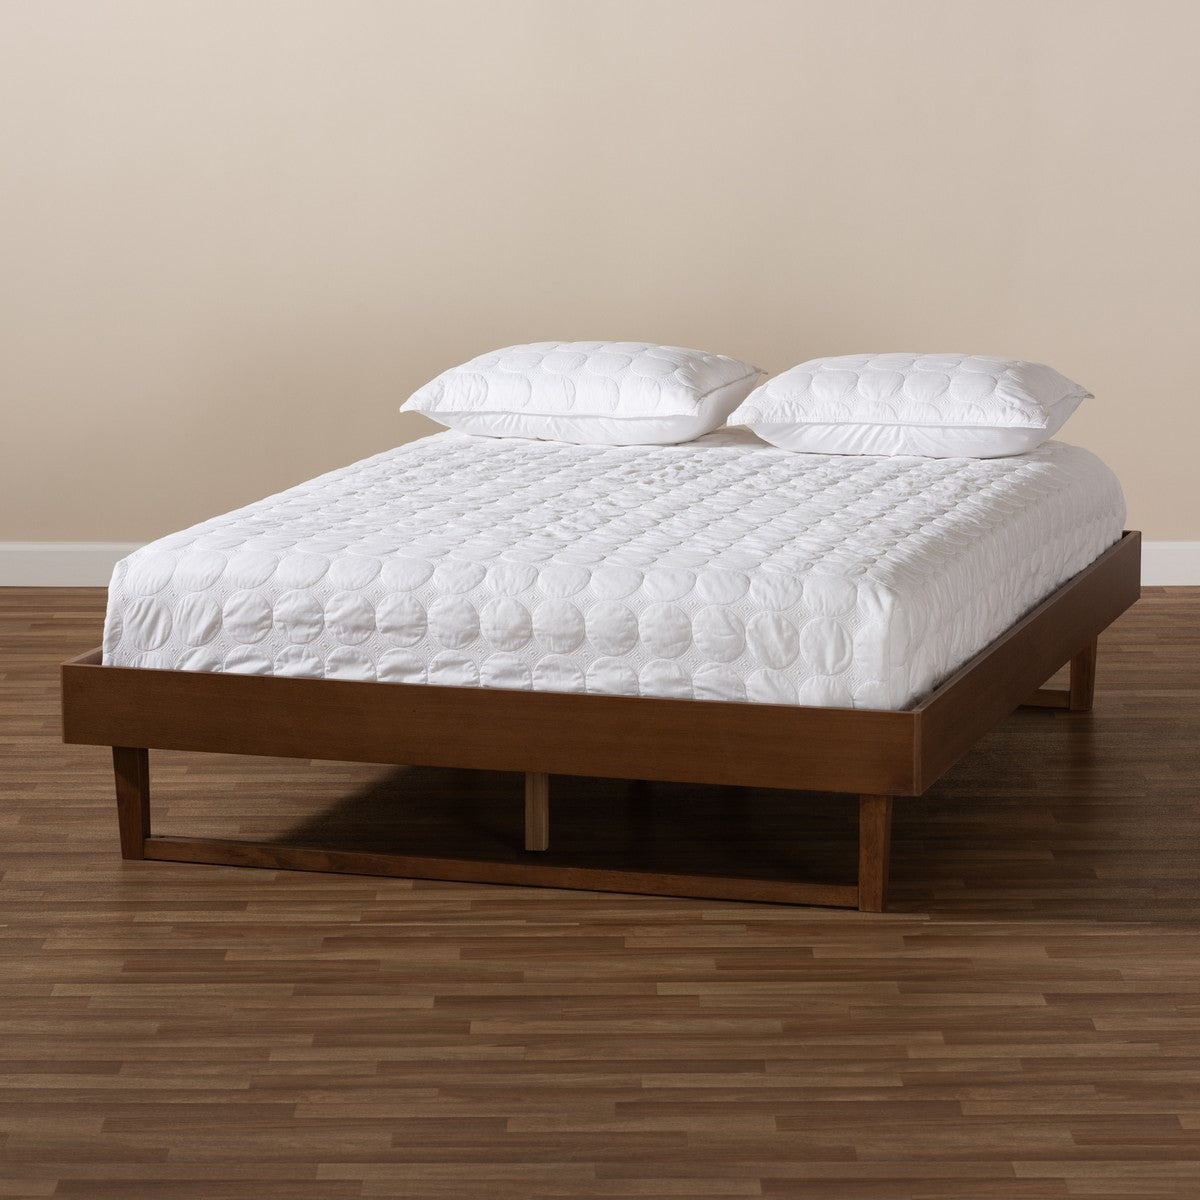 Baxton Studio Liliya Mid-Century Modern Walnut Brown Finished Wood Full Size Platform Bed Frame